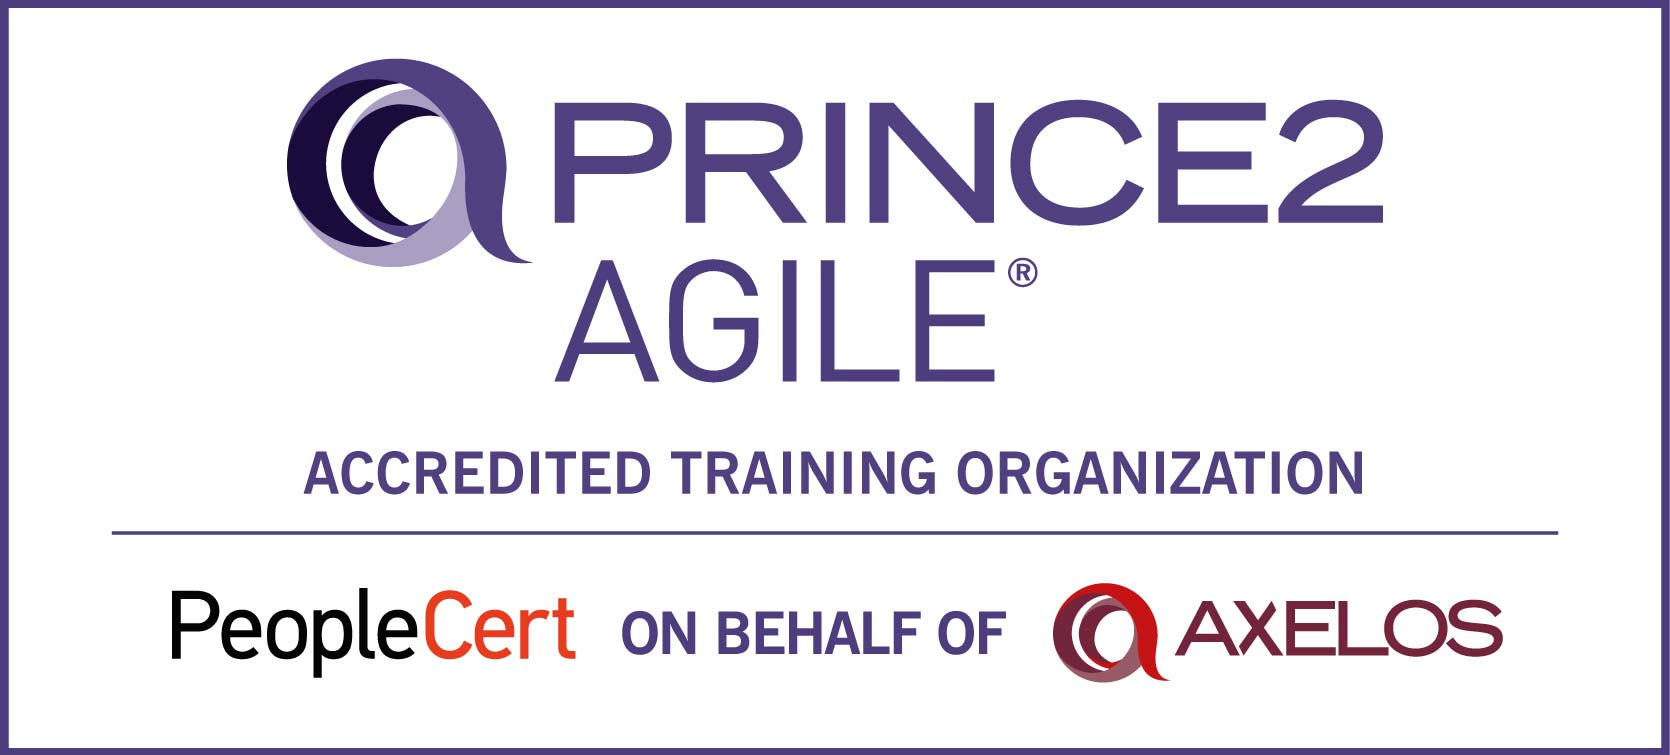 Prince2 agile akkrediteret organisation